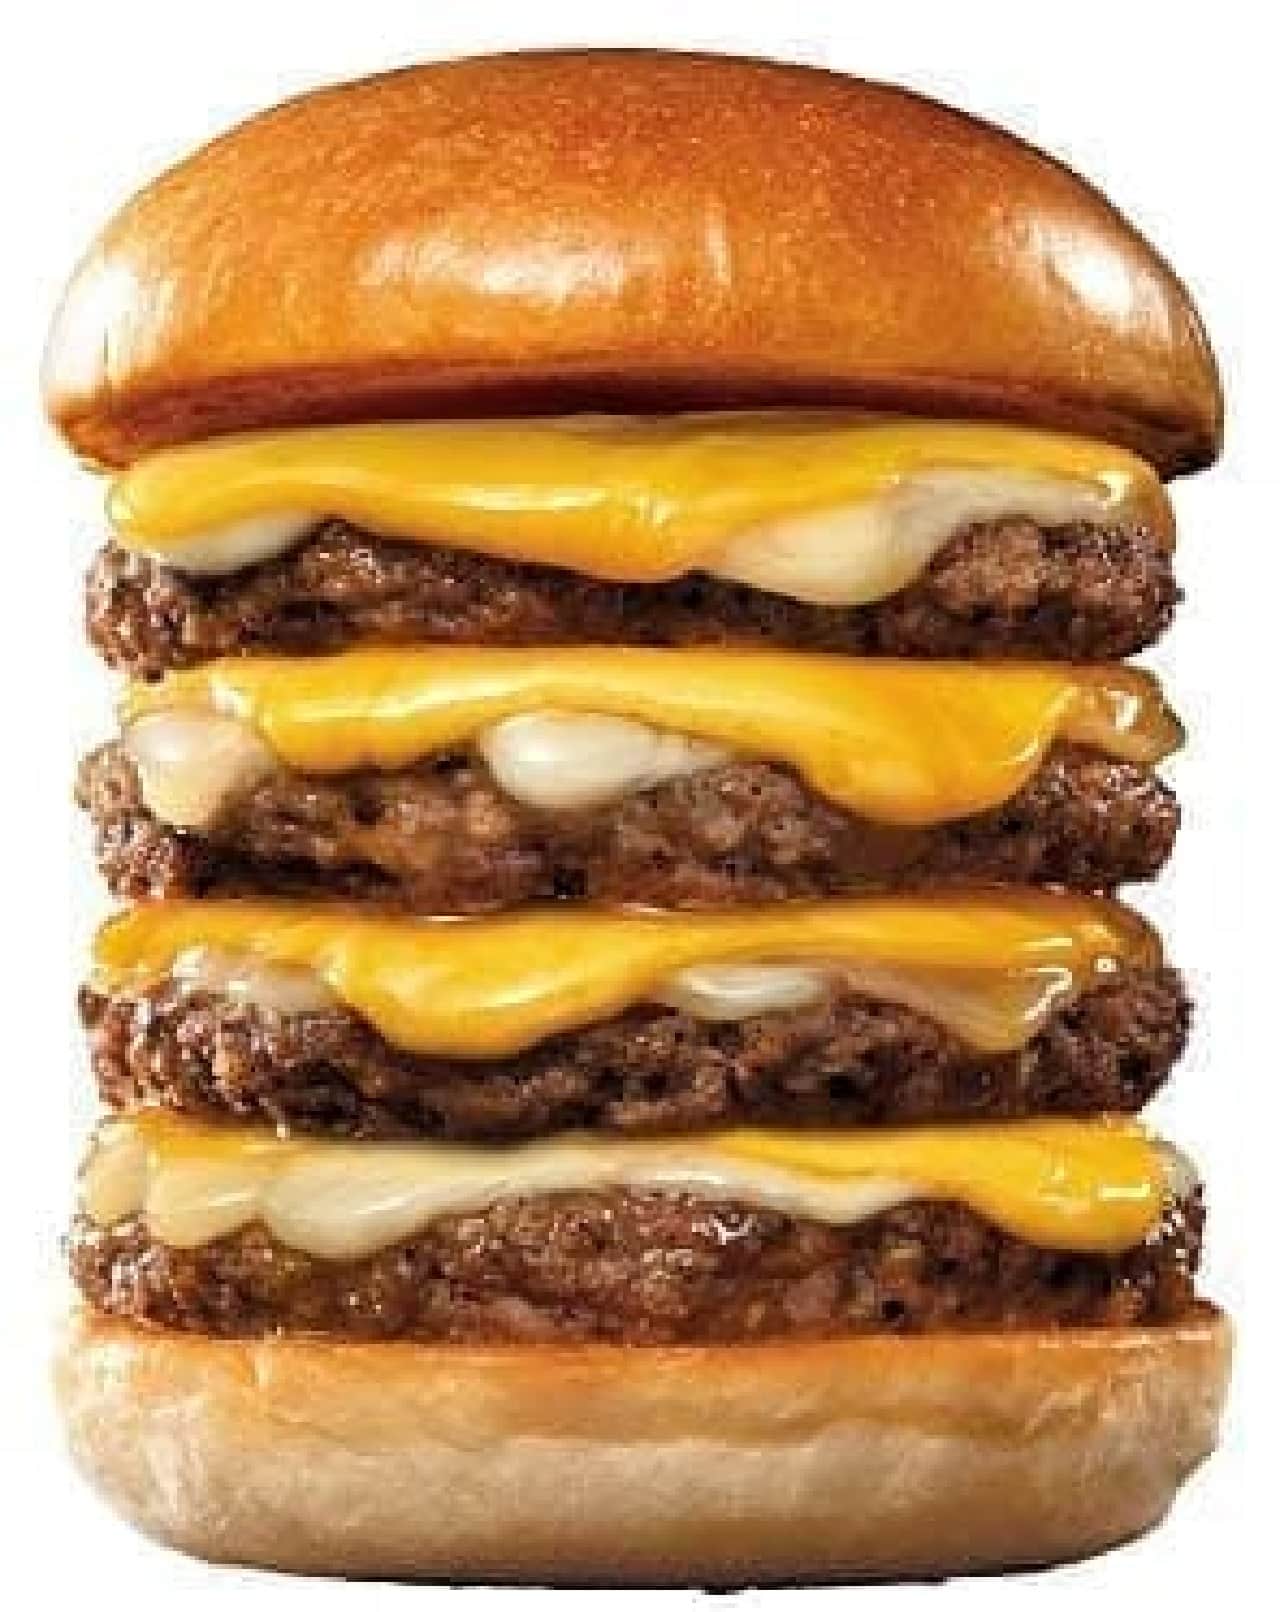 Lotteria "4-dan exquisite cheeseburger"